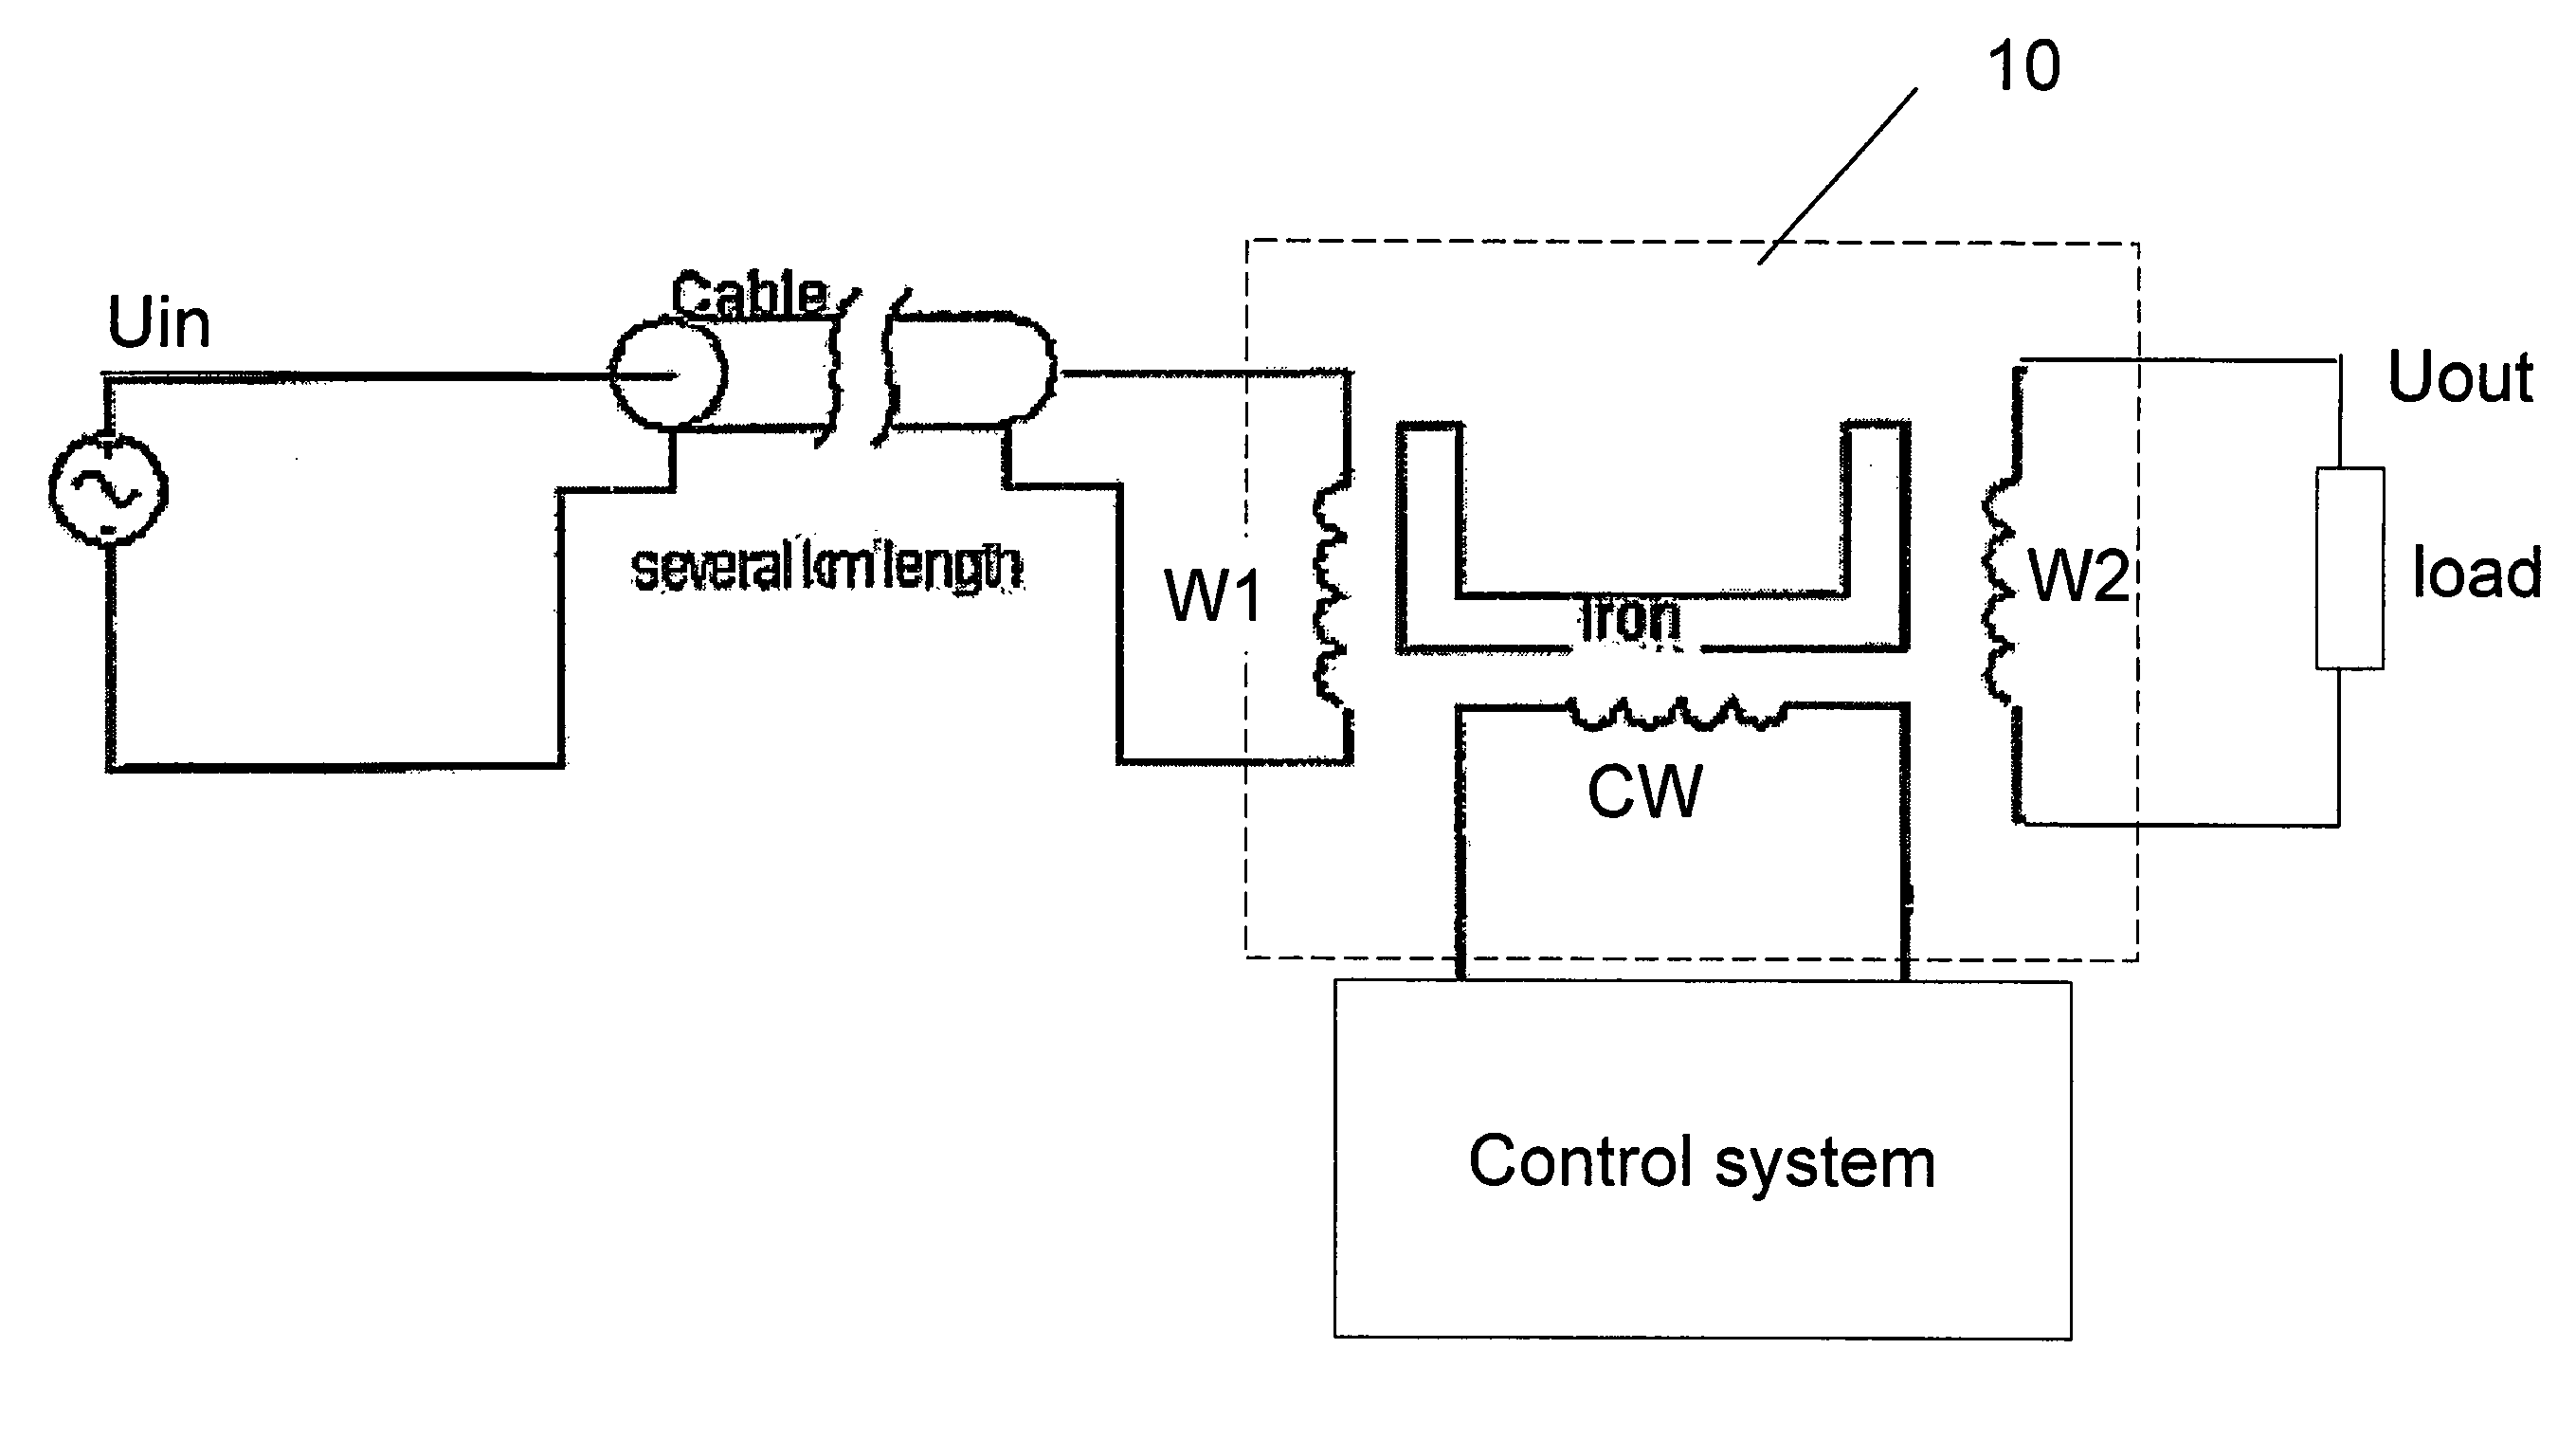 Power transmission system